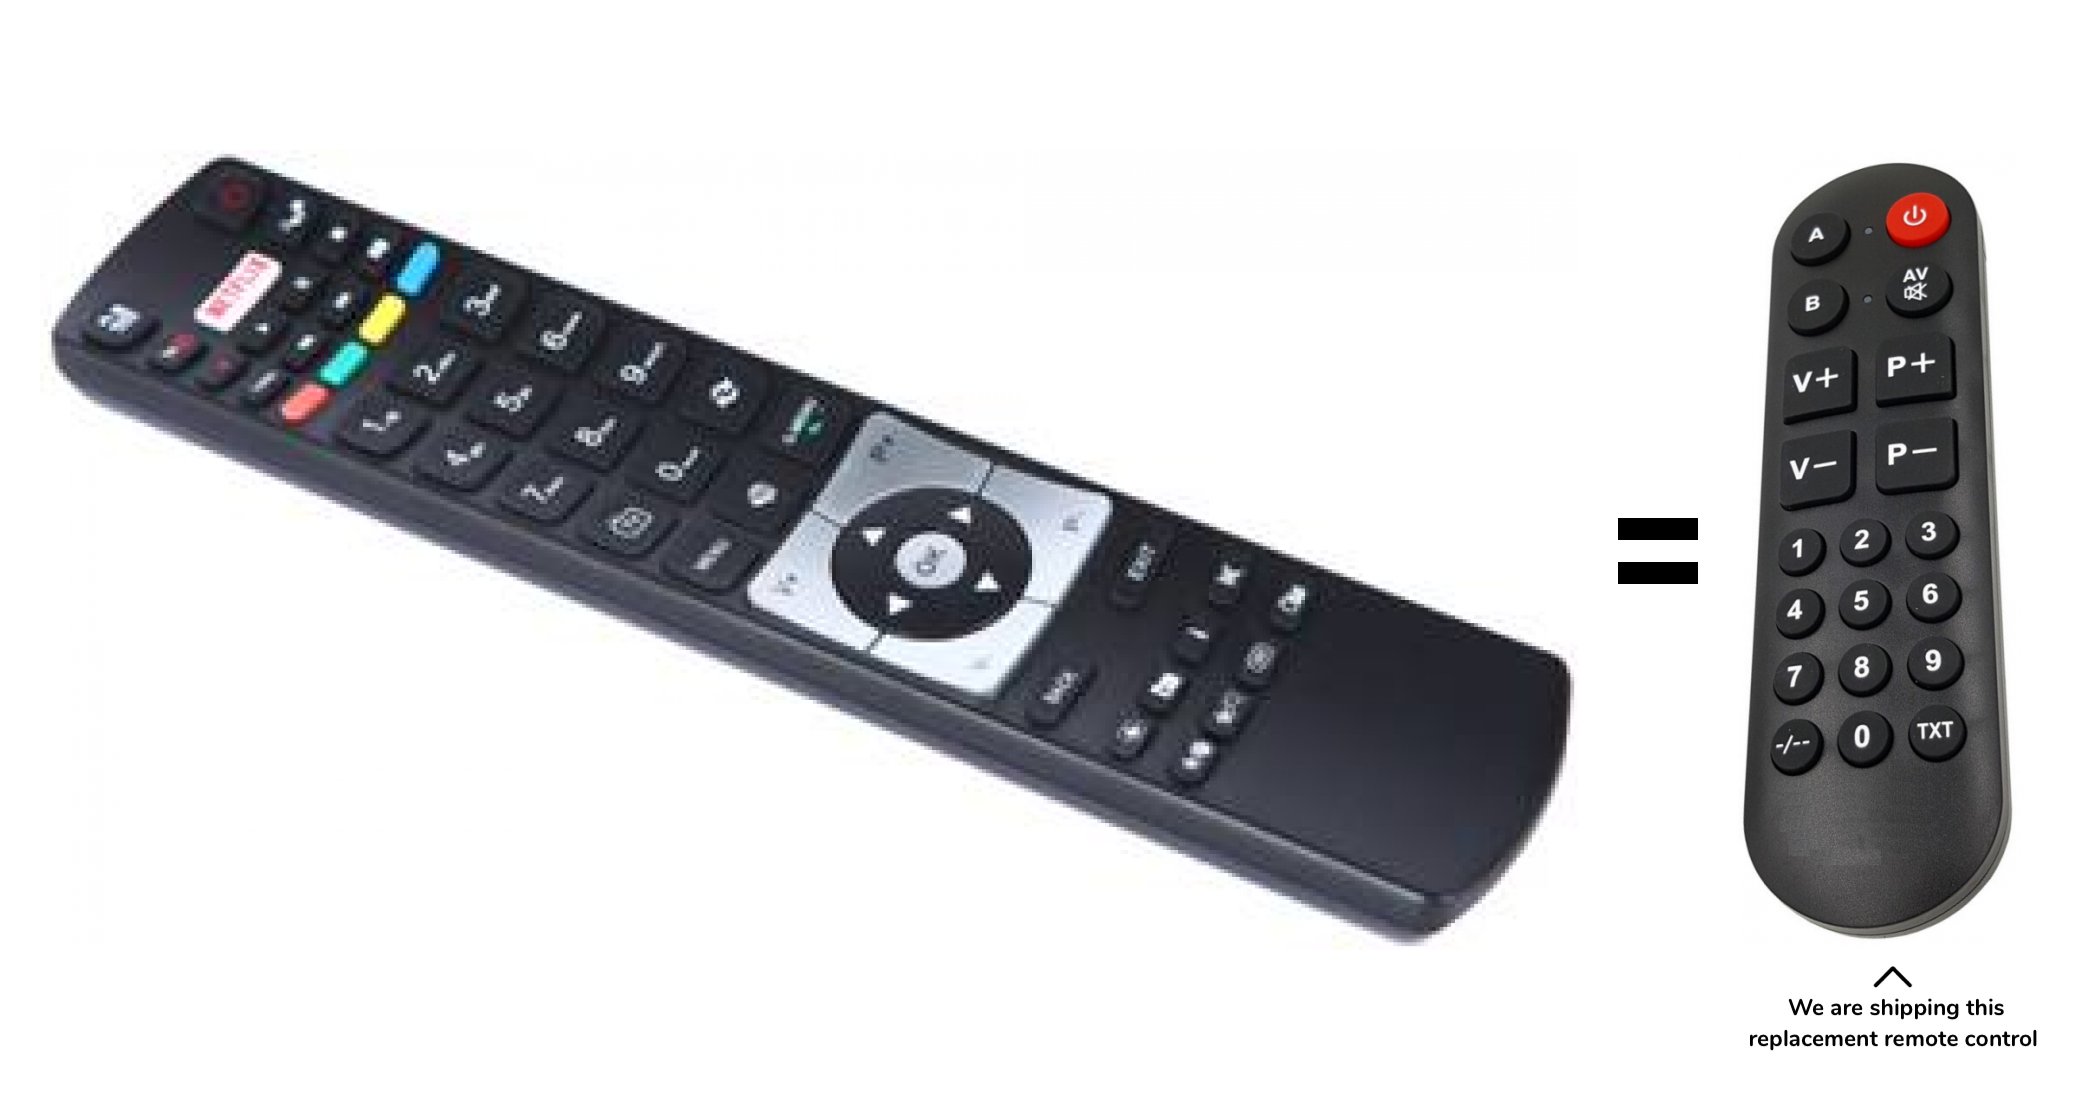 Finlux TVF43FUC7060, TVF43FFC5660 remote control for seniors